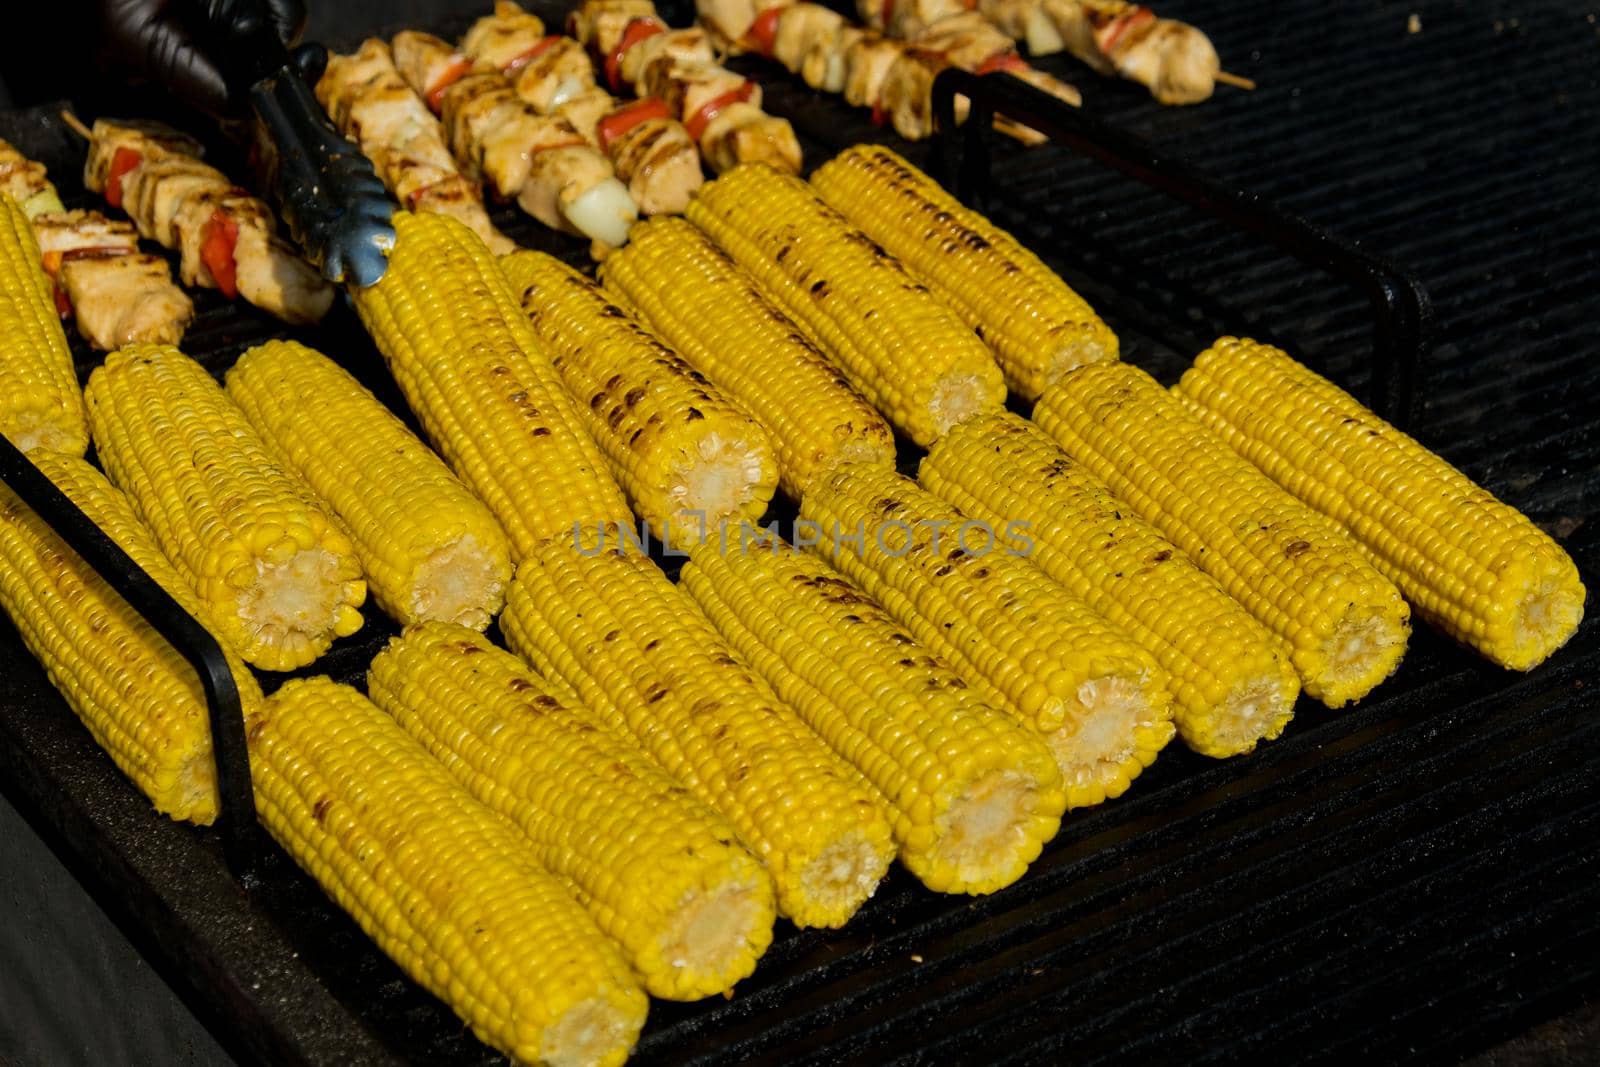 Grilling corn cob. Street food festival. Selective focus. by leonik